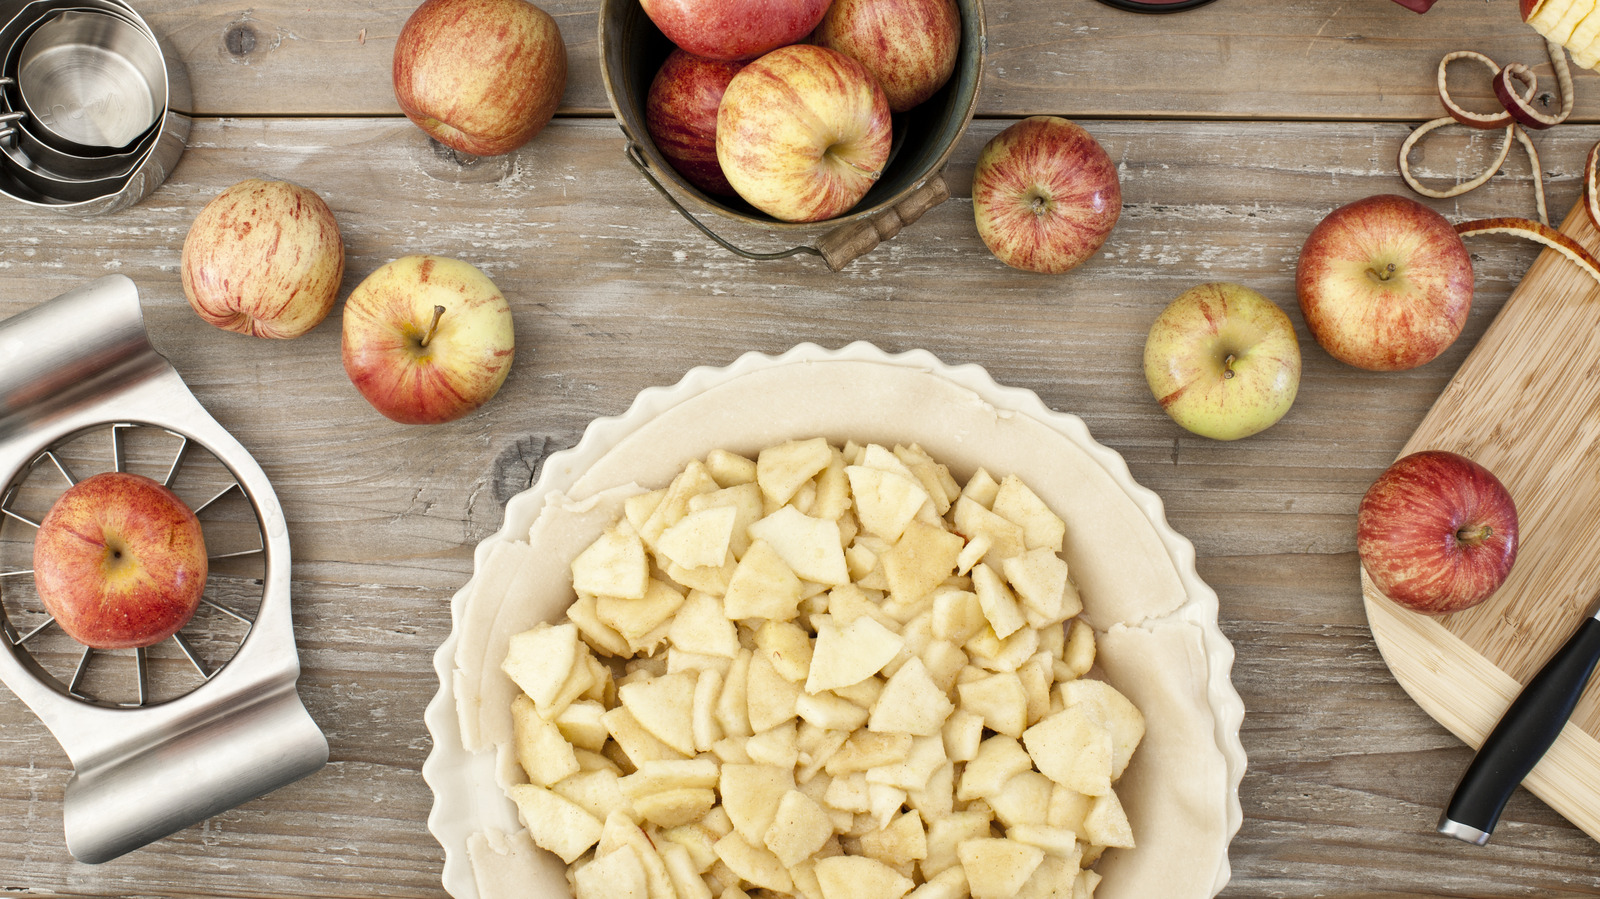 Freezing Apples for Pie Filling